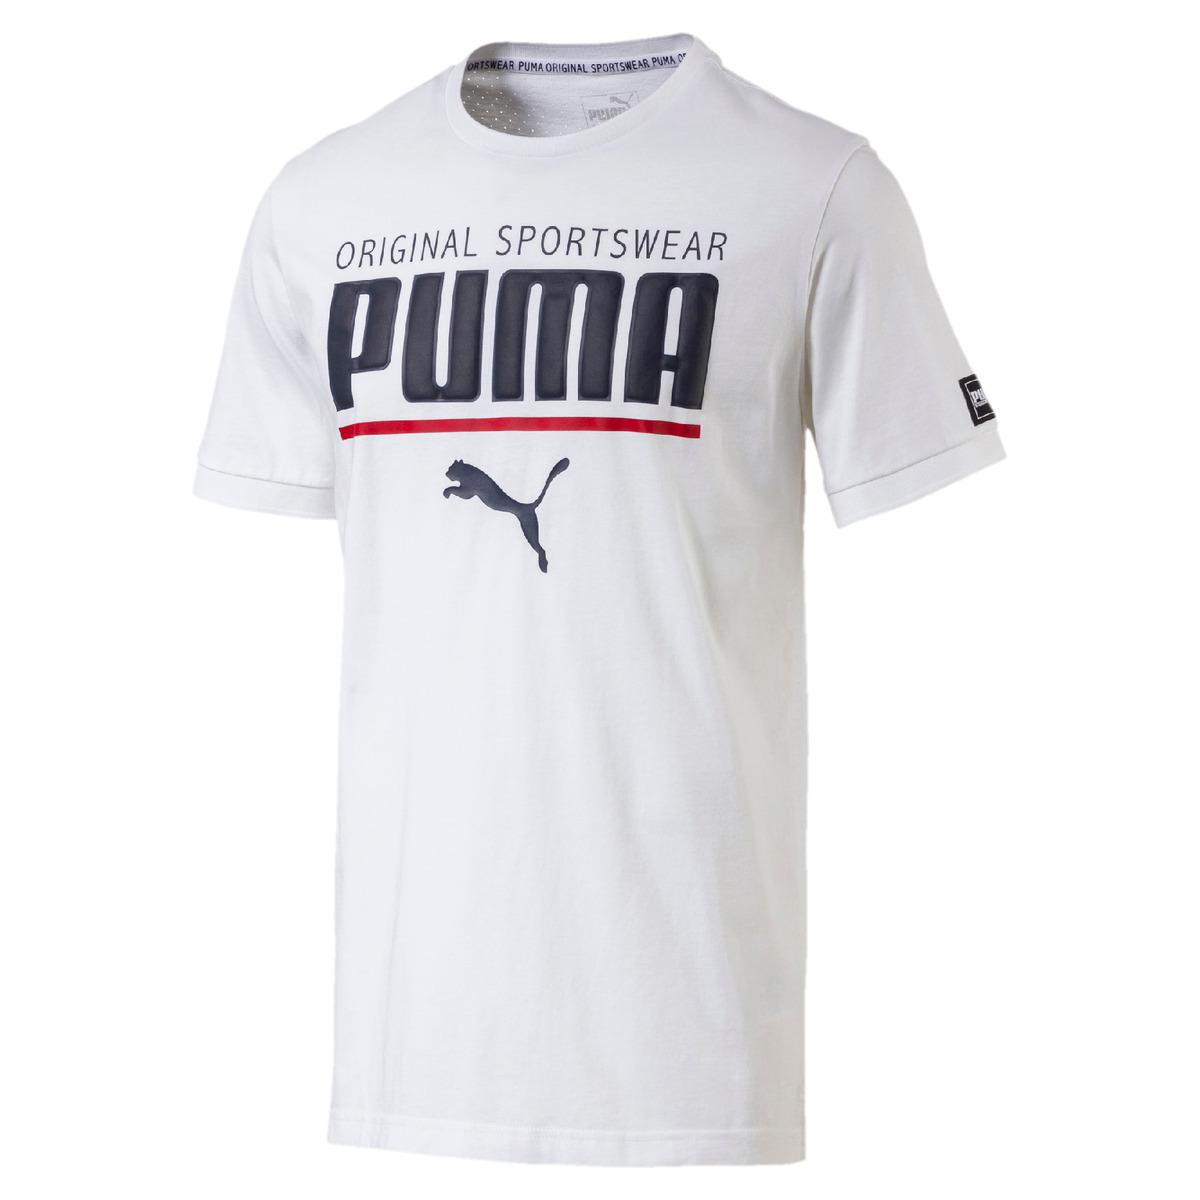 puma original t shirt - 57% remise - acpakademi.com